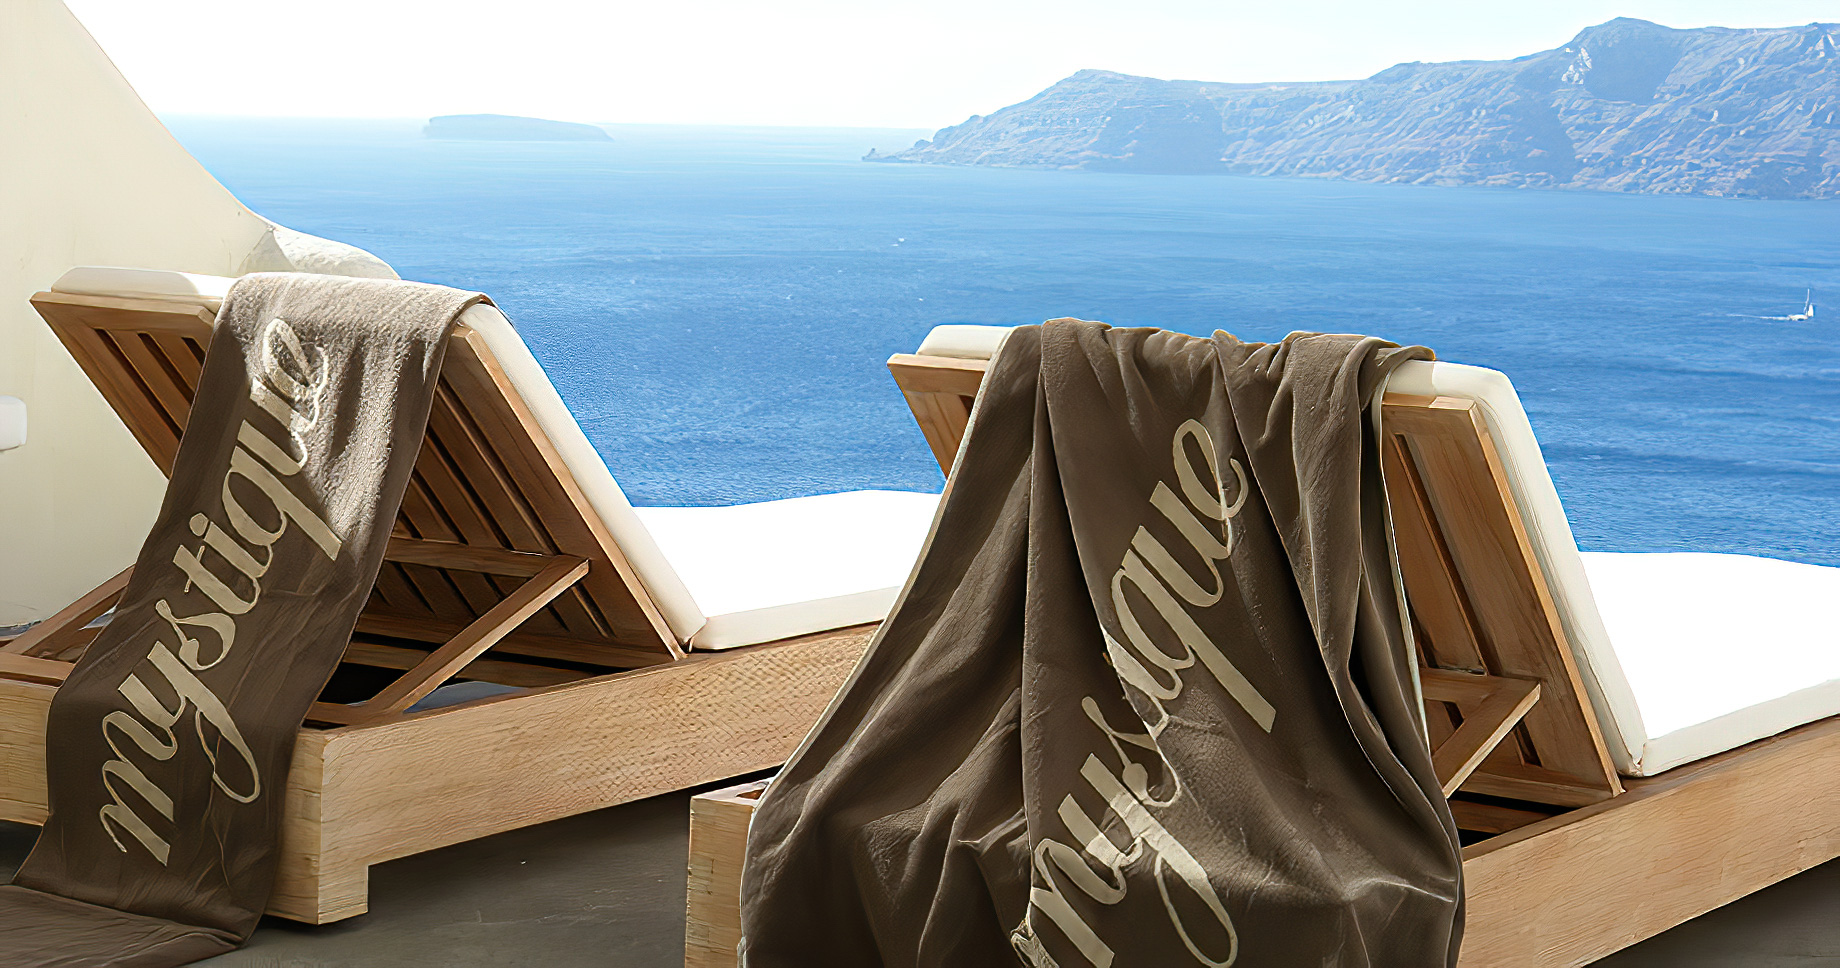 Mystique Hotel Santorini – Oia, Santorini Island, Greece – Clifftop Ocean View Deck Lounge Chairs